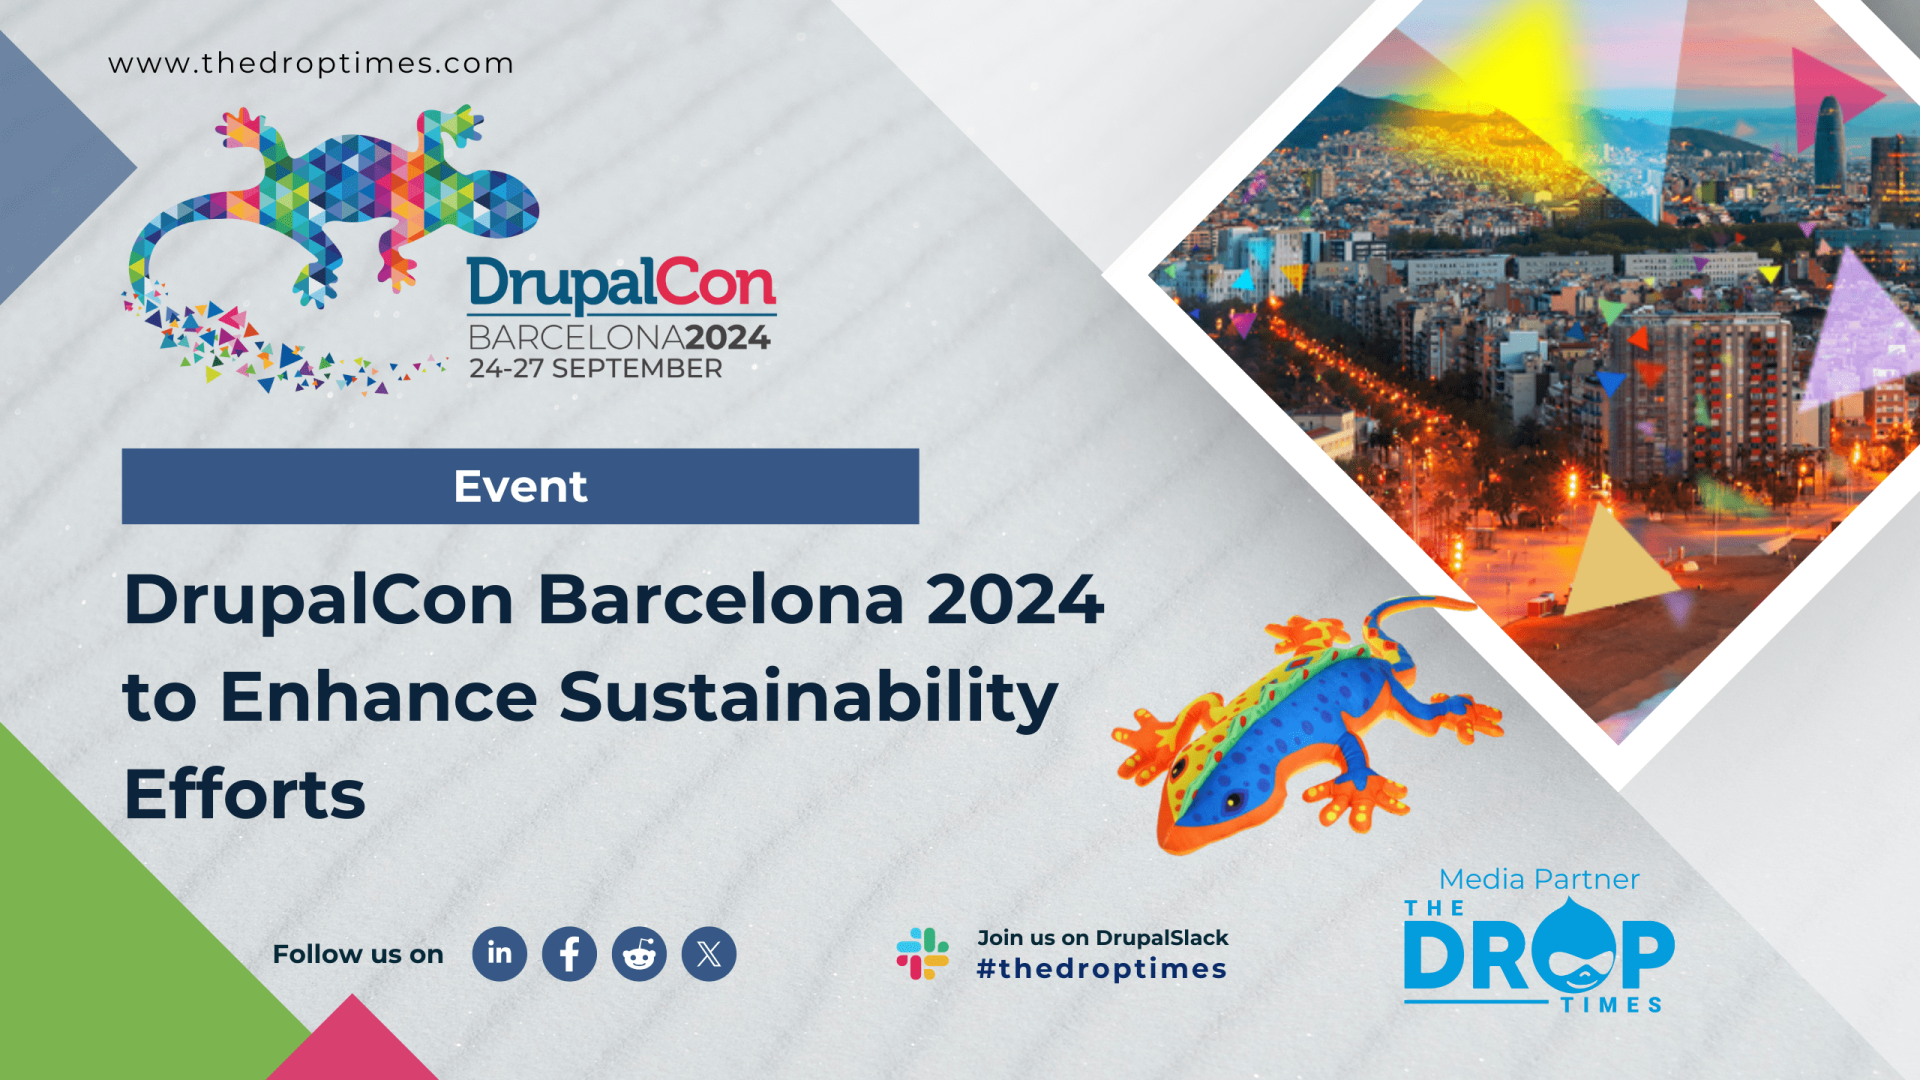 DrupalCon Barcelona 2024 to Enhance Sustainability Efforts